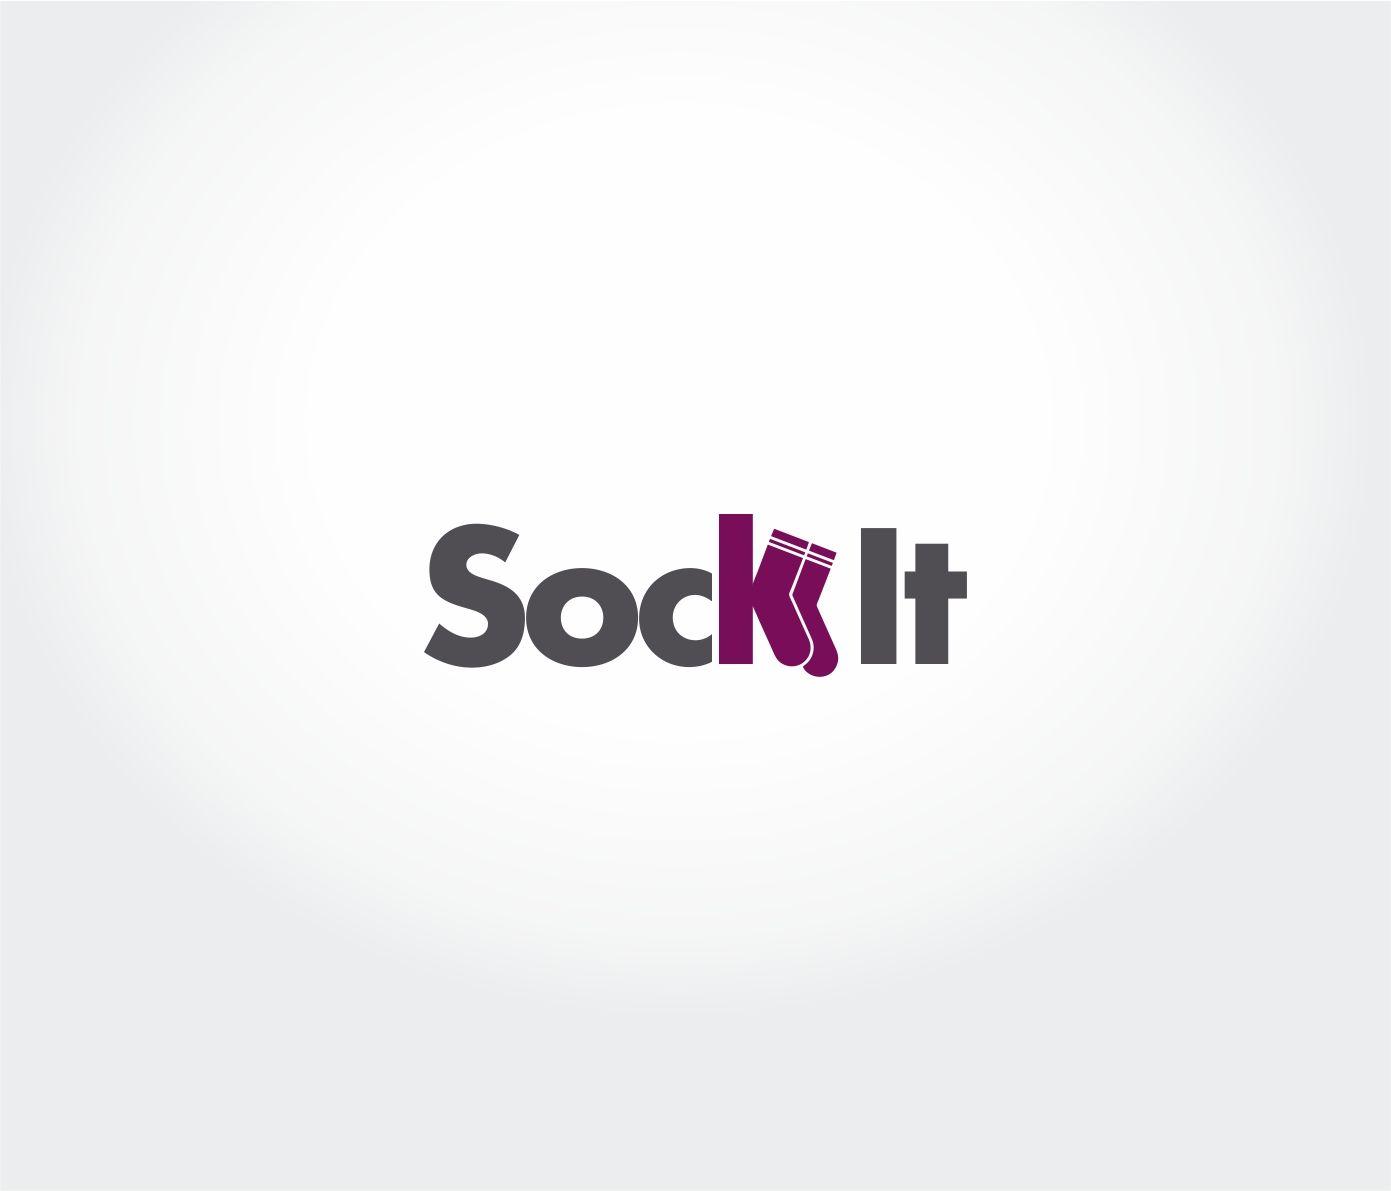 Sock Logo - Playful, Modern, Clothing Logo Design for Sock It by vikas naik ...